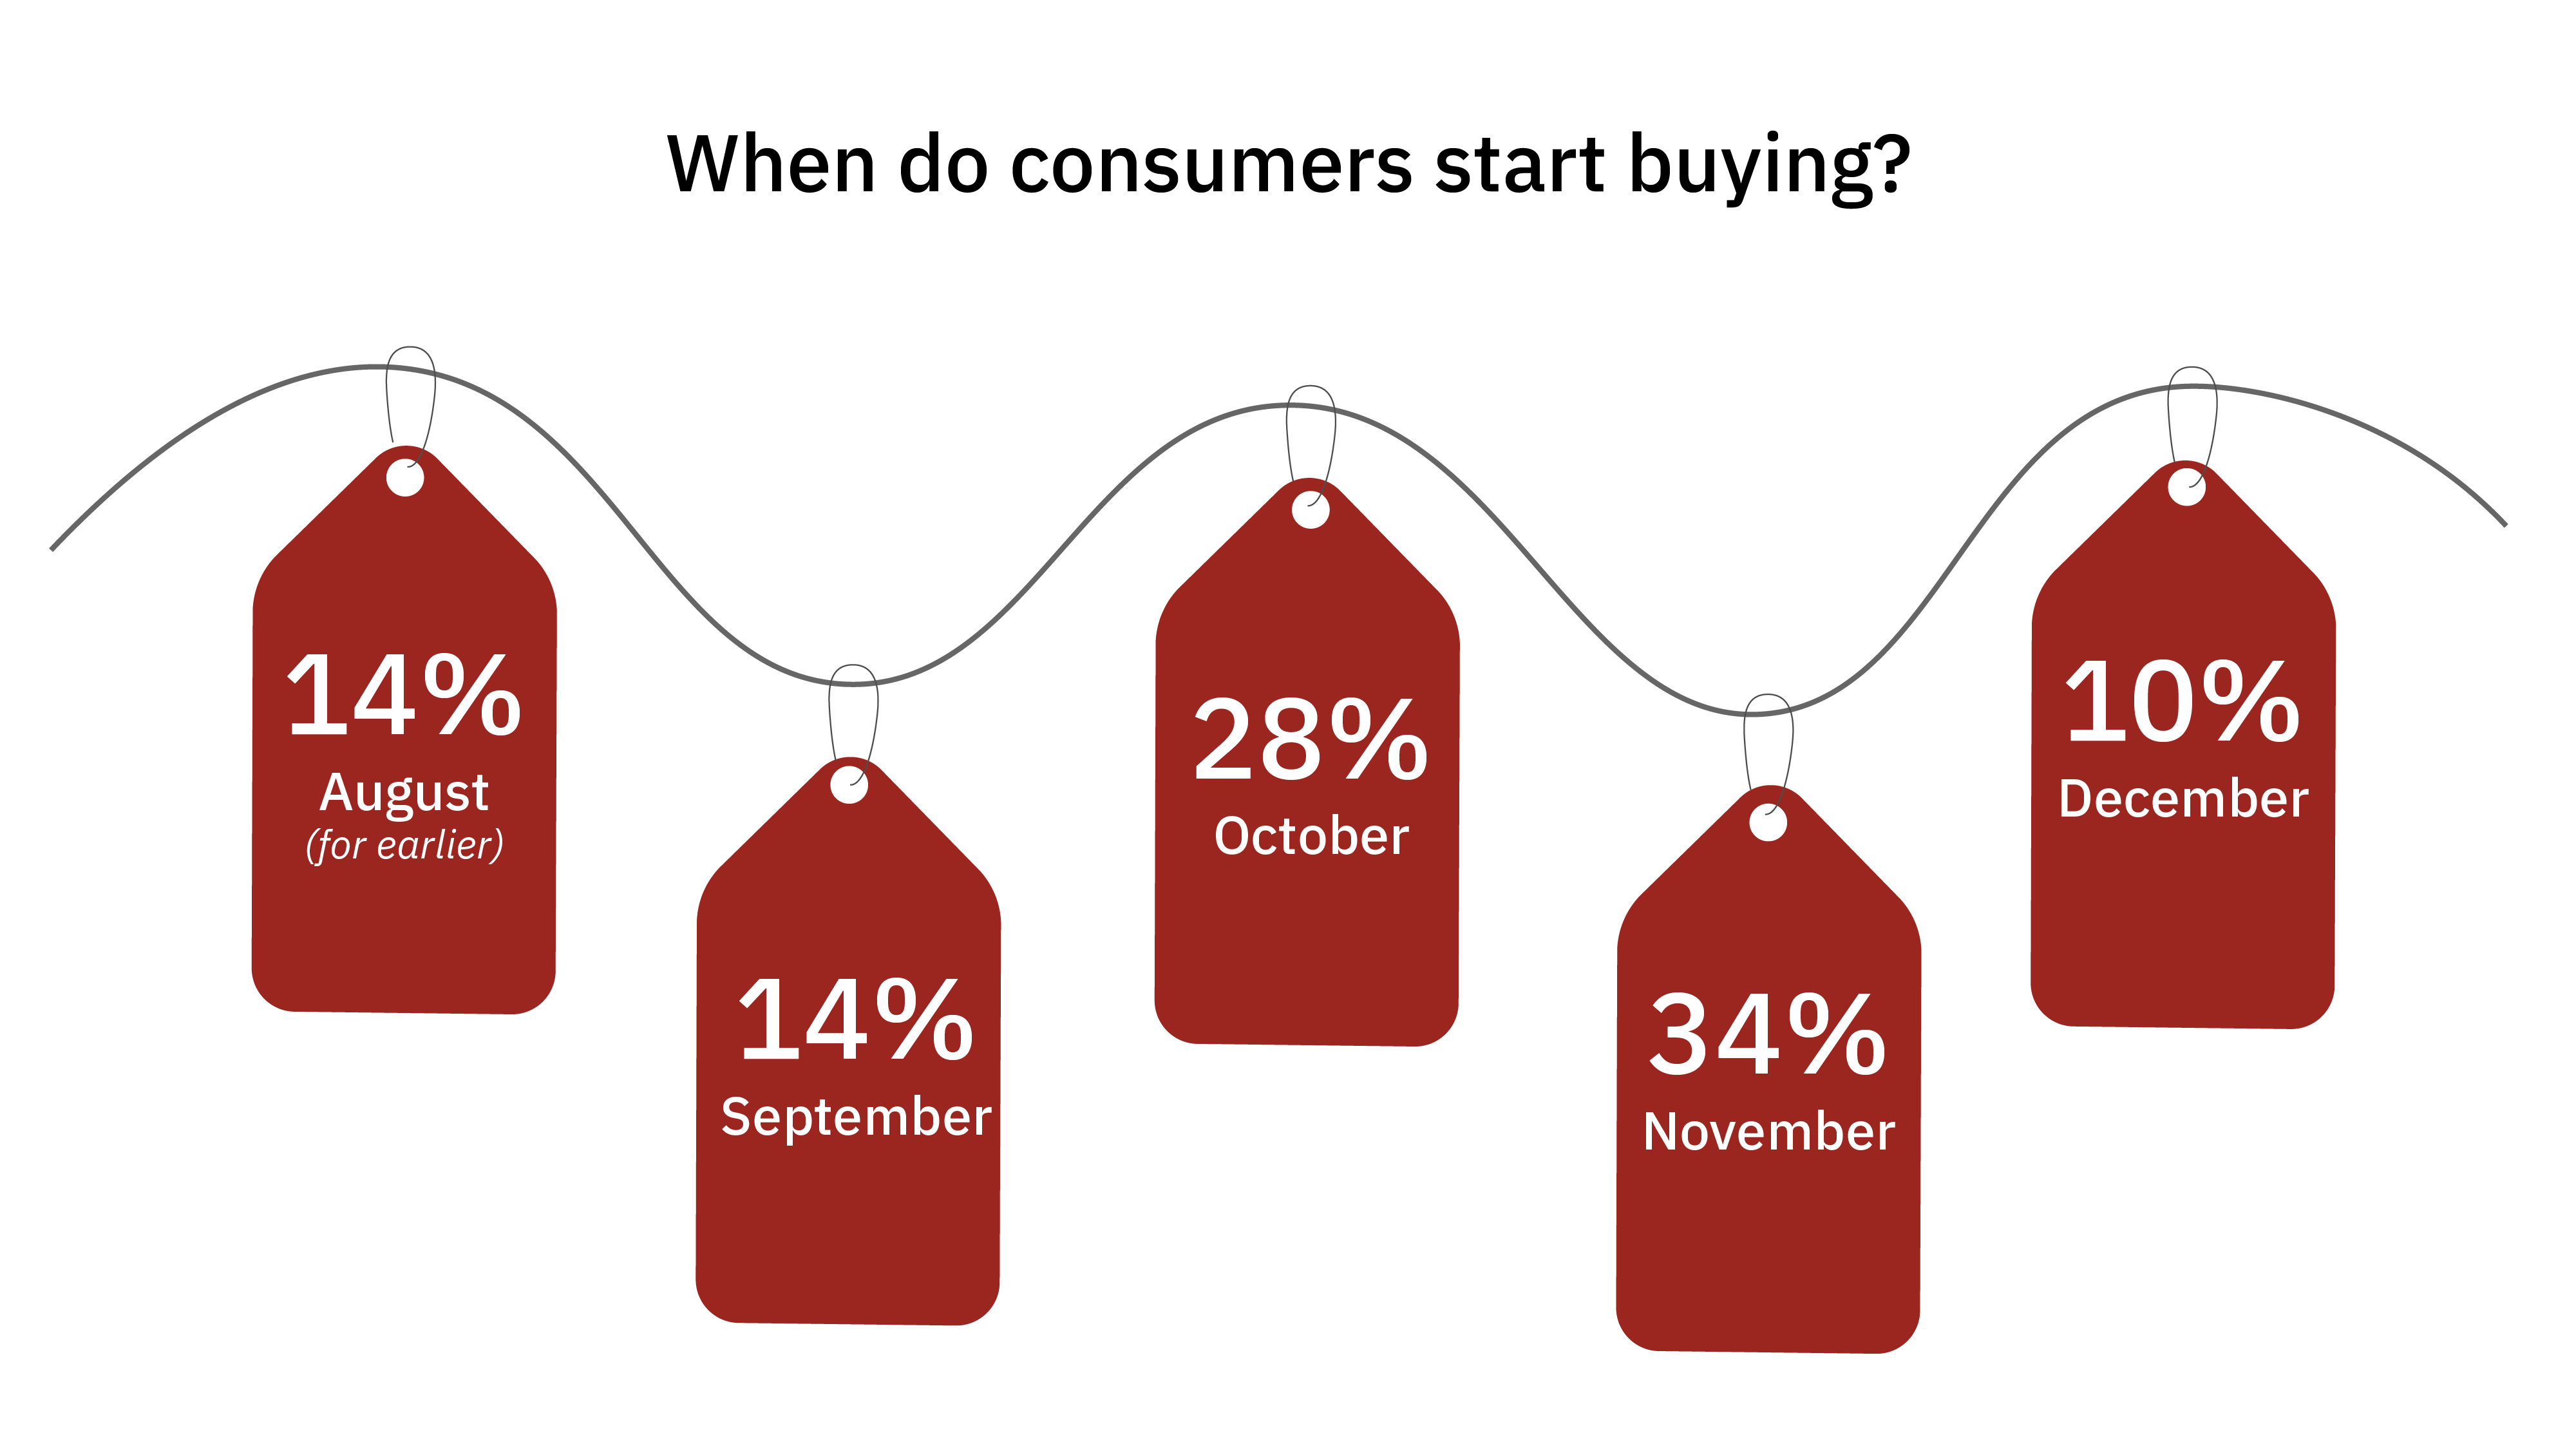 When do consumers start buying?